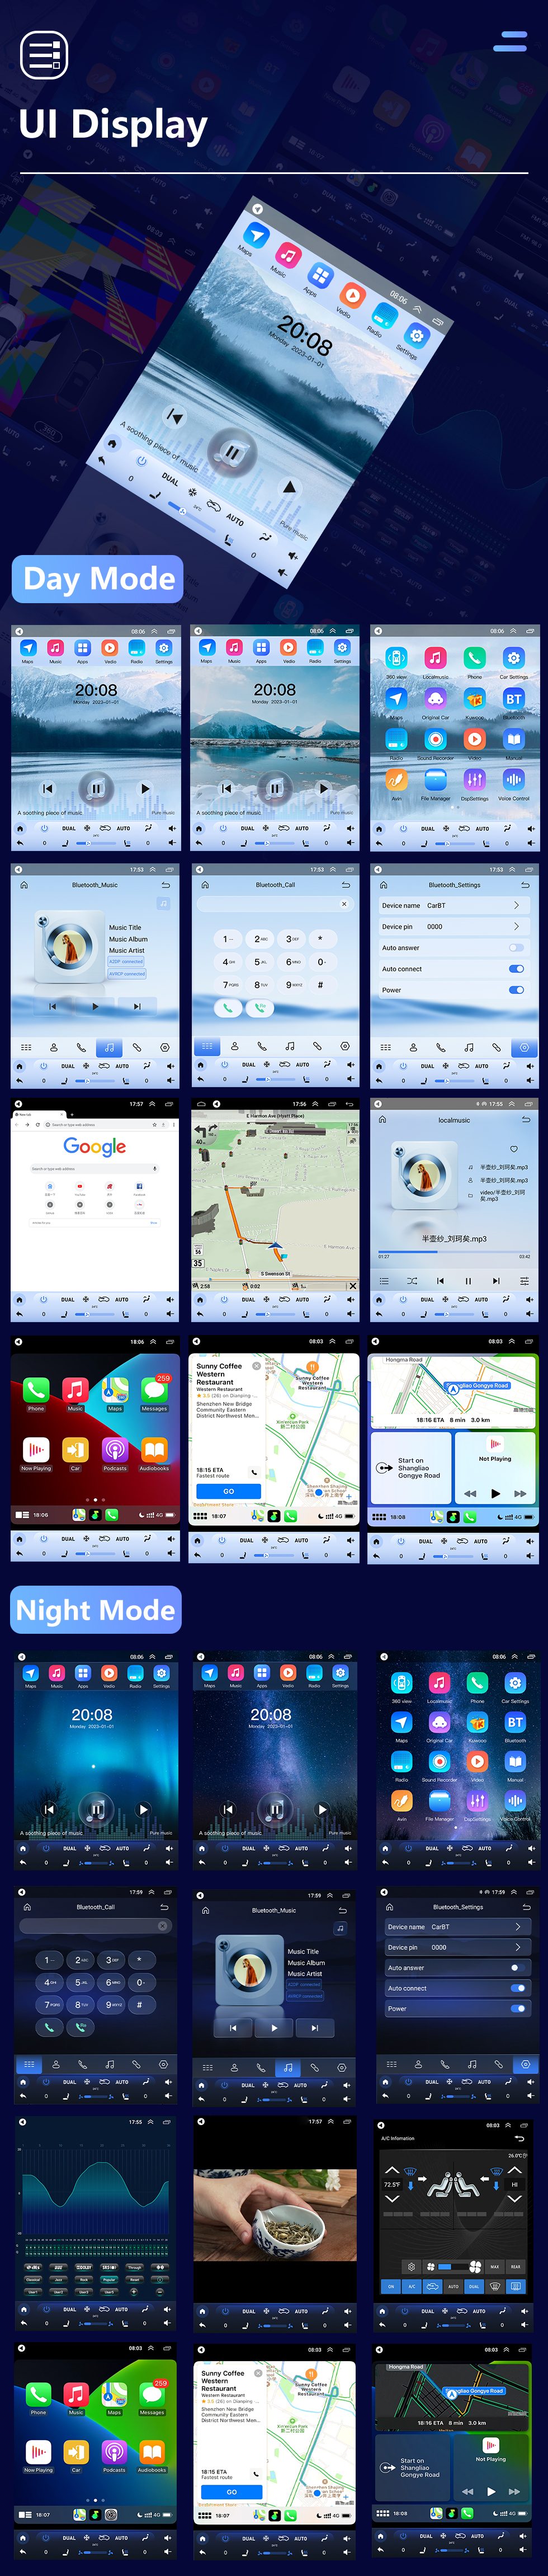 Seicane 9,7 Zoll Android 10.0 für 2018 Changan COS1 Radio GPS Navigationssystem mit HD Touchscreen Bluetooth Unterstützung Carplay TPMS